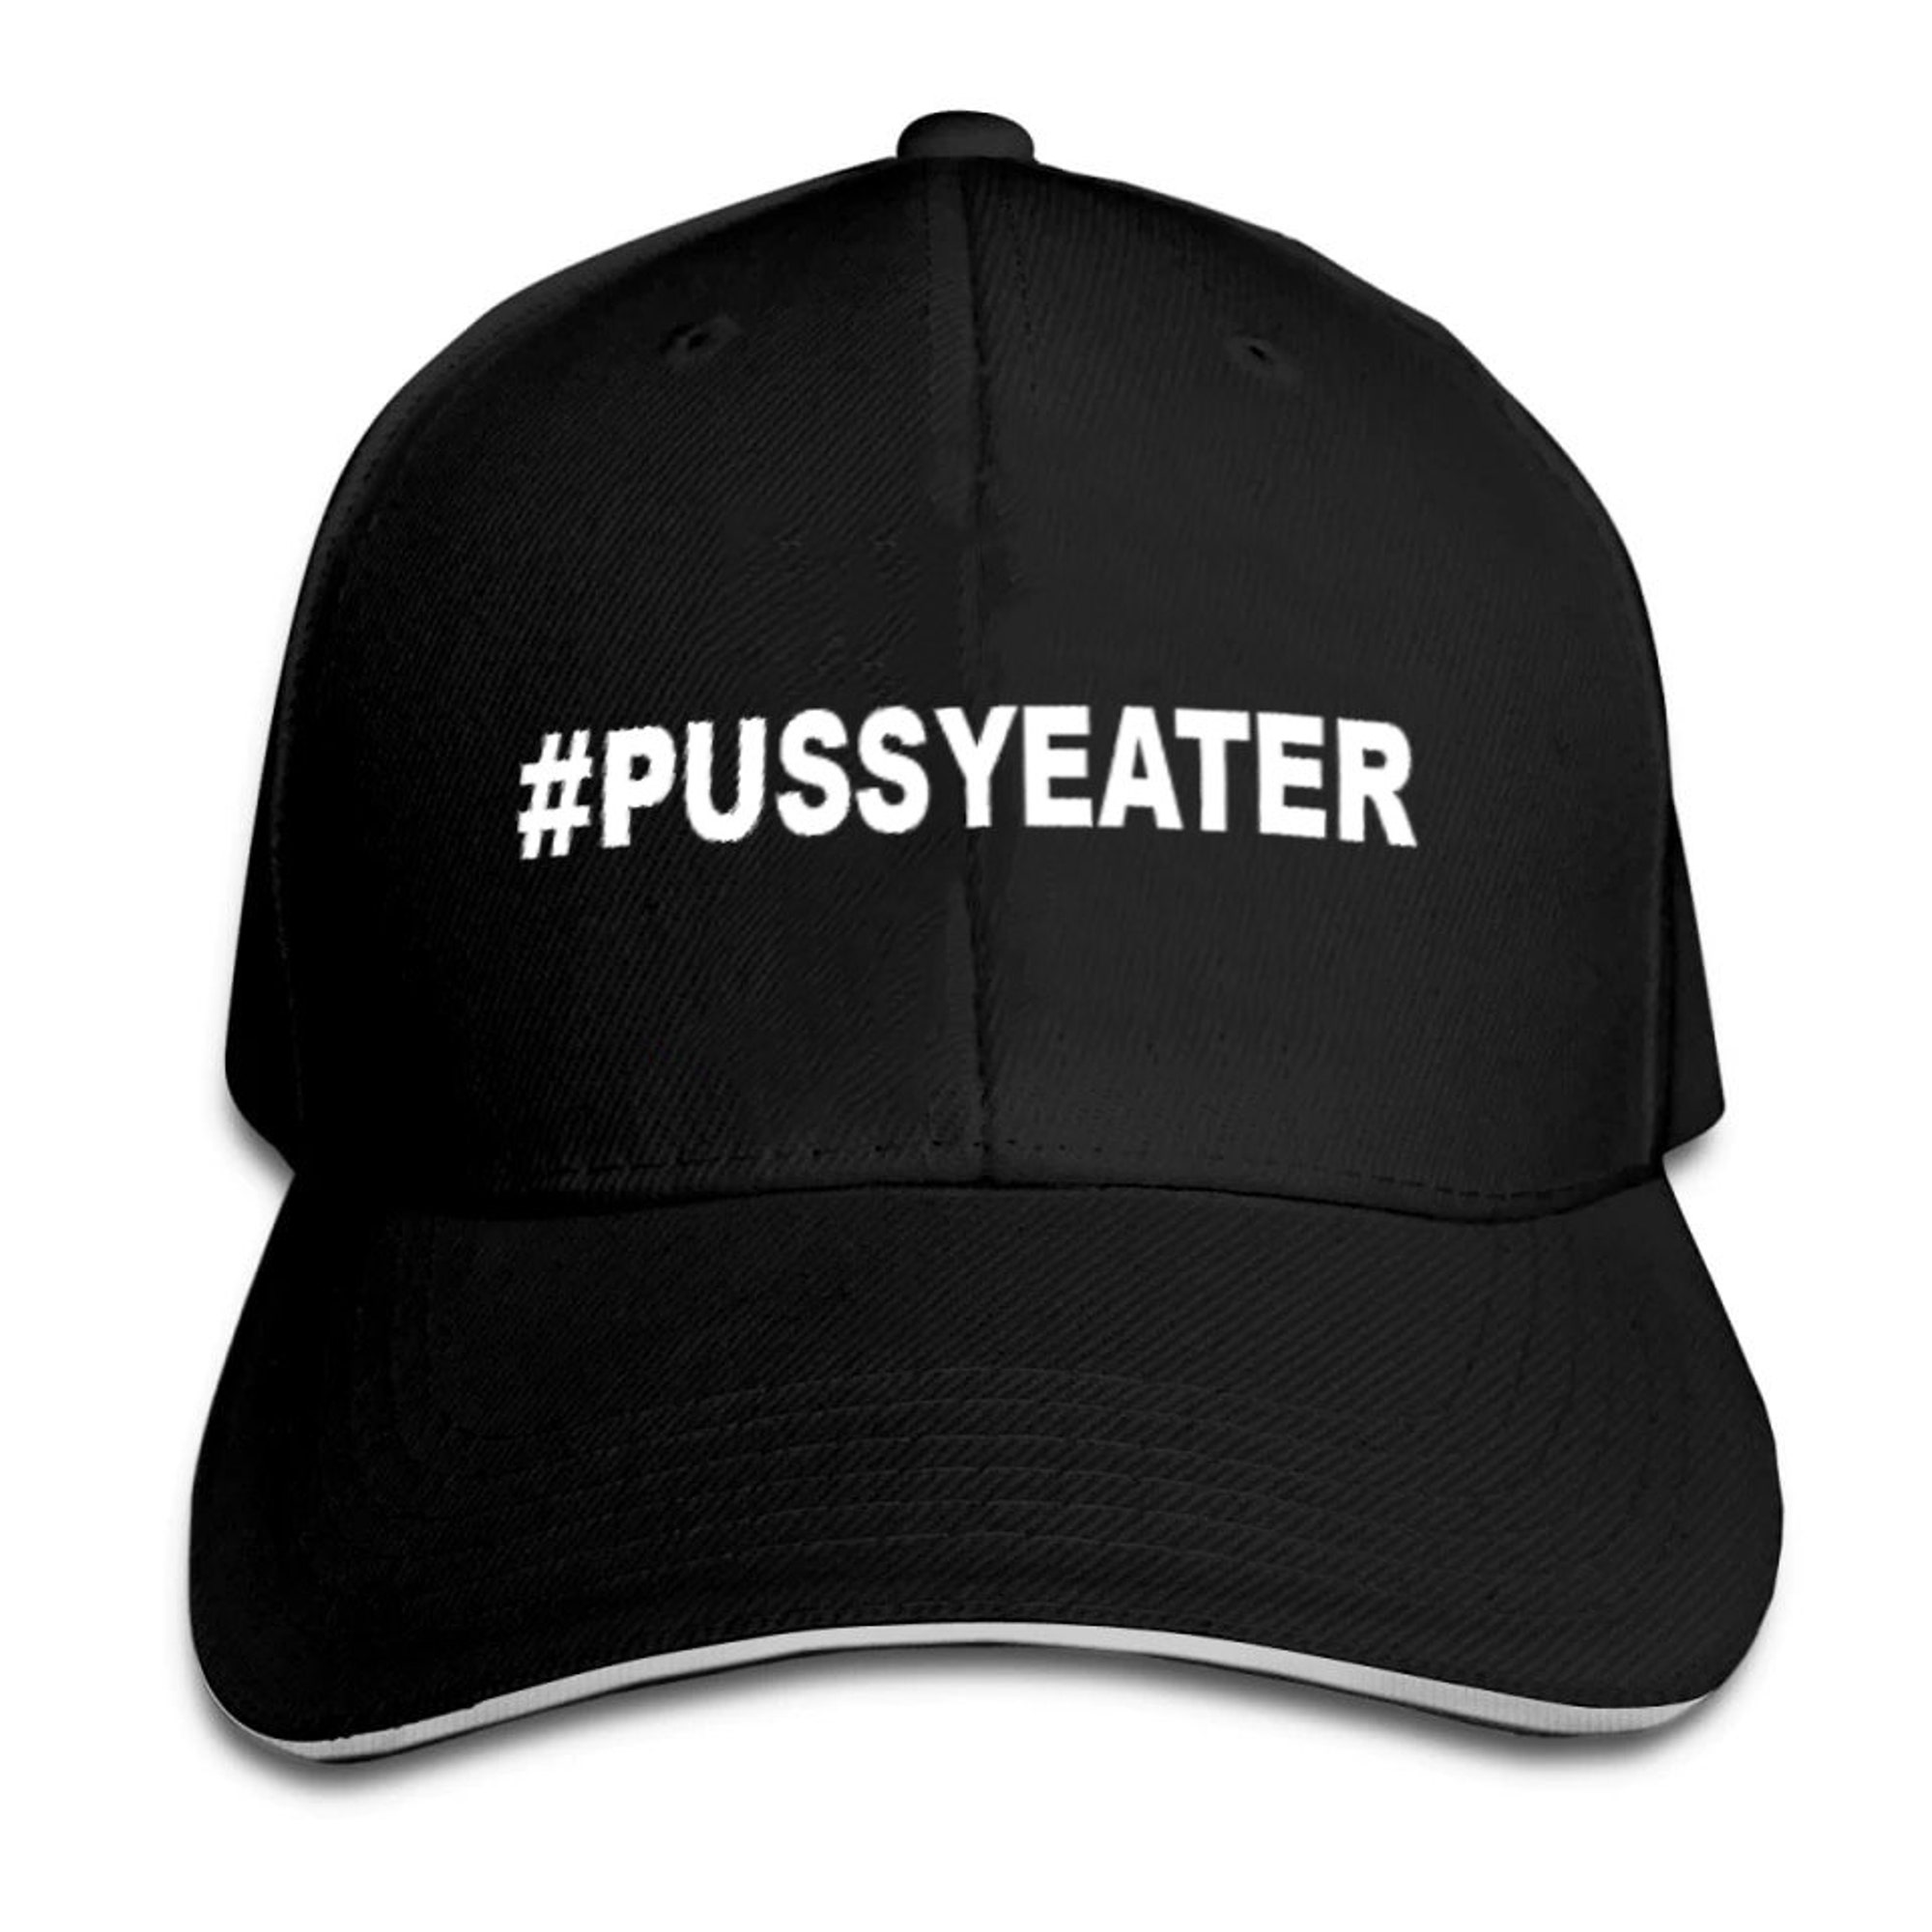 Pussy Eater Baseball Cap, PUSSYEATER Hat, Baseball Cap for Man